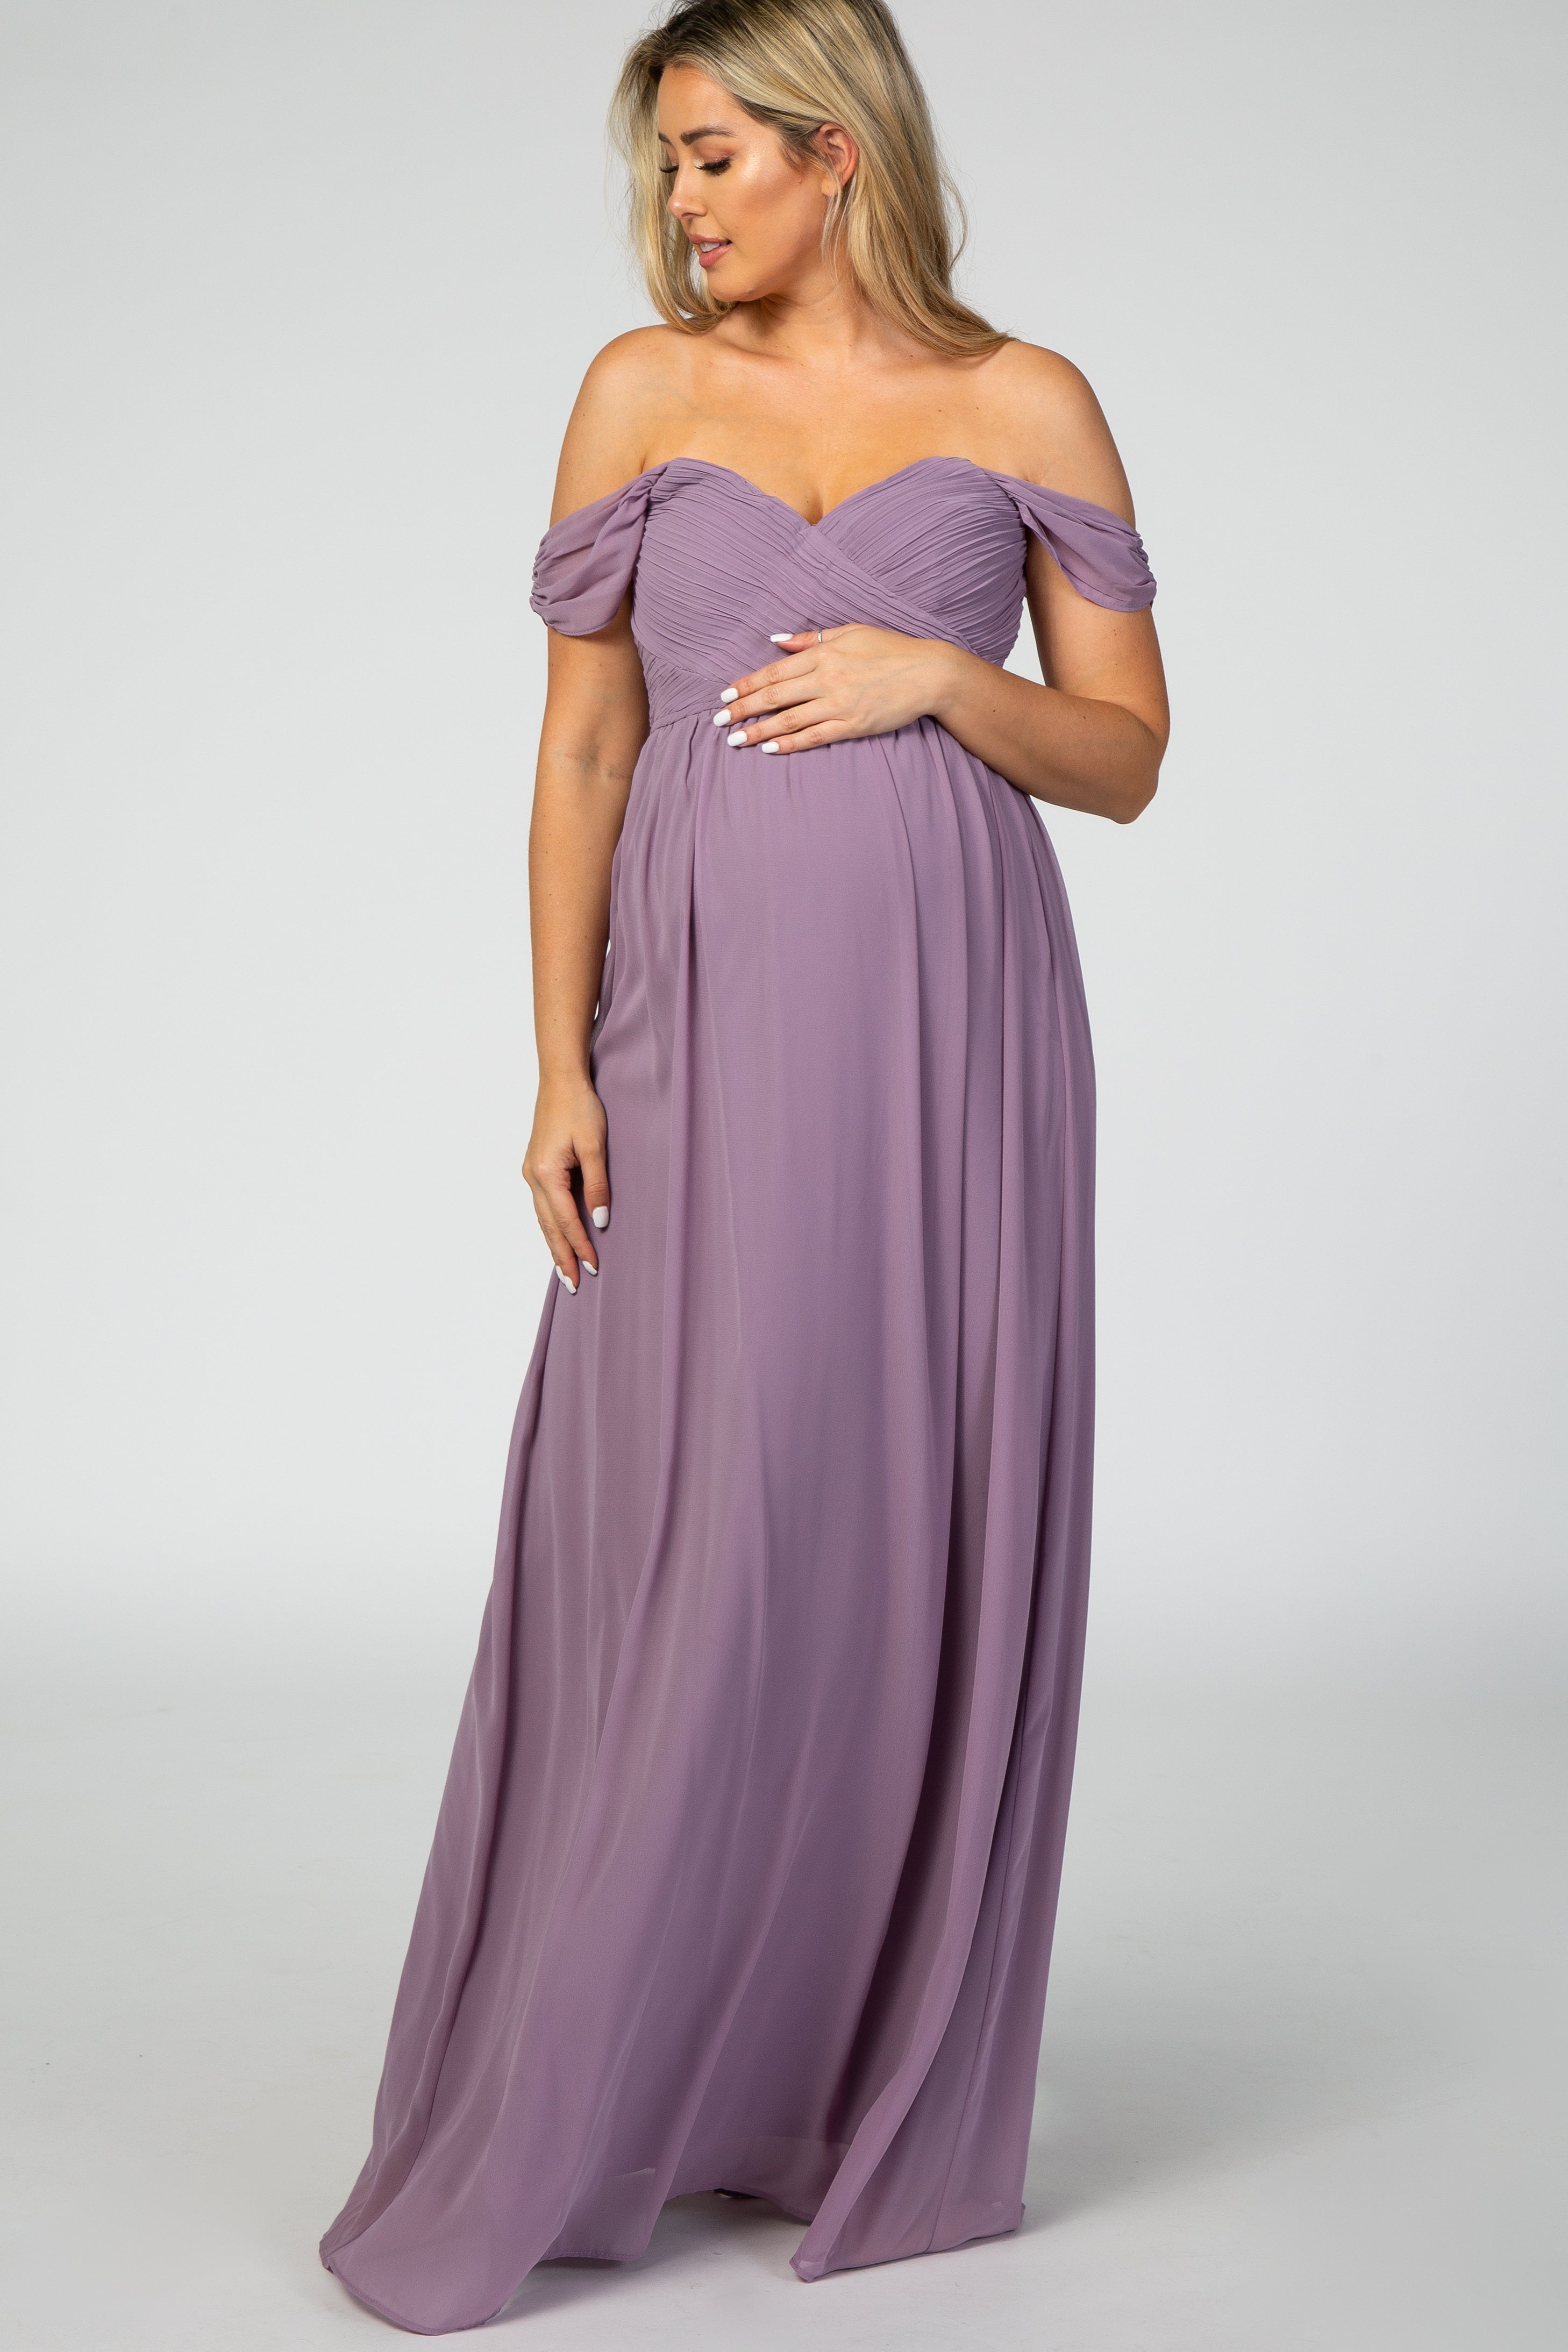 Jordan Big Girls' Jersey Dress-Purple, Size: Medium, Polyester